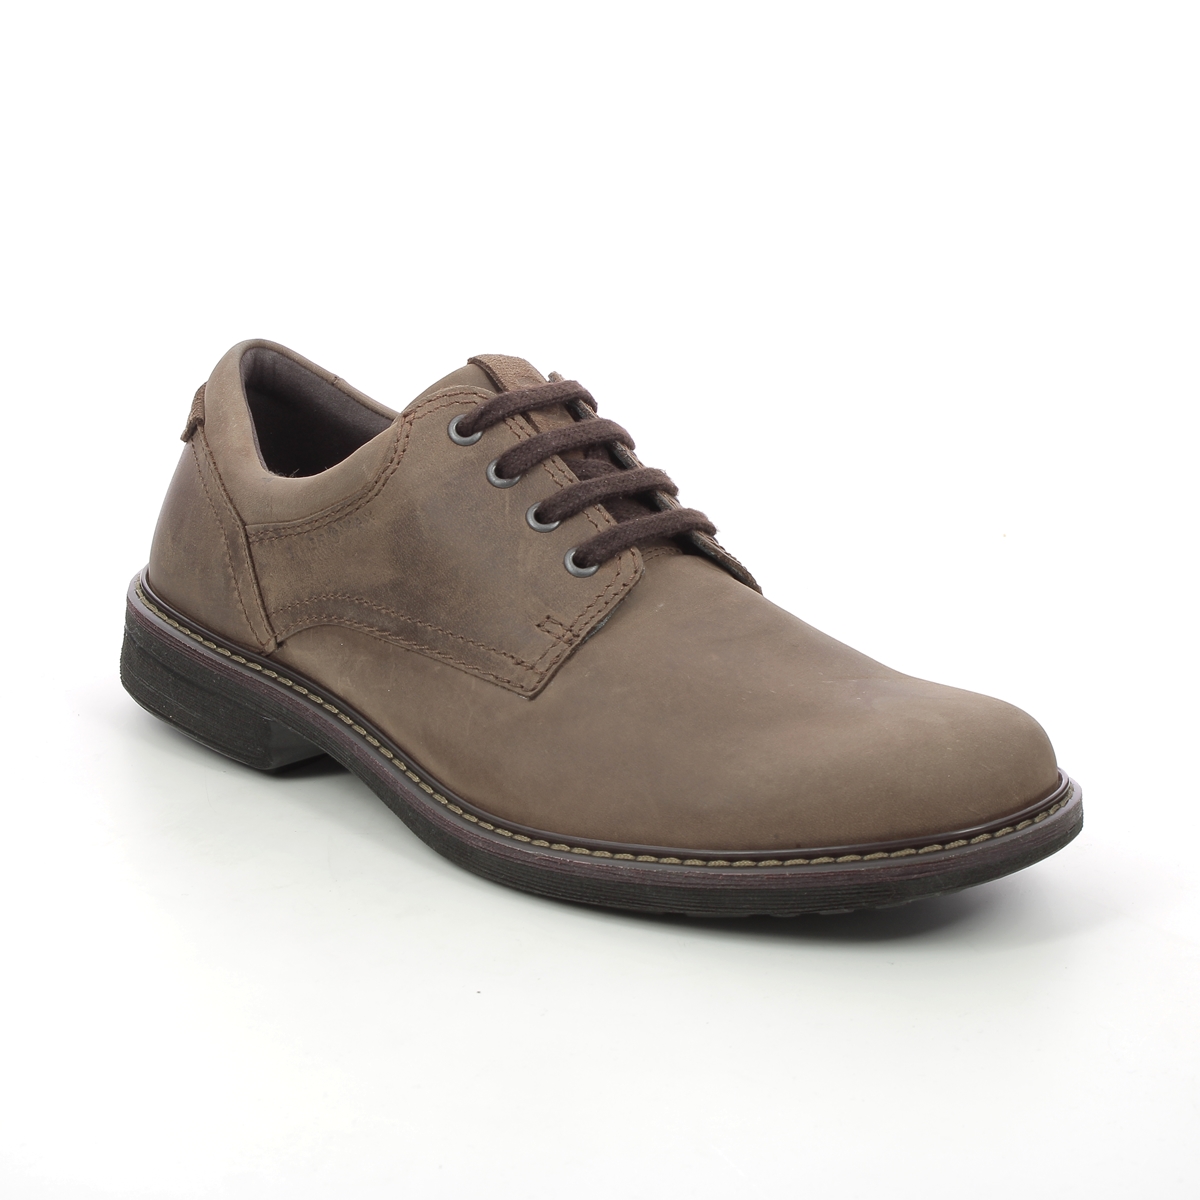 ECCO Turn Hydromax 510444-55778 Brown nubuck comfort shoes